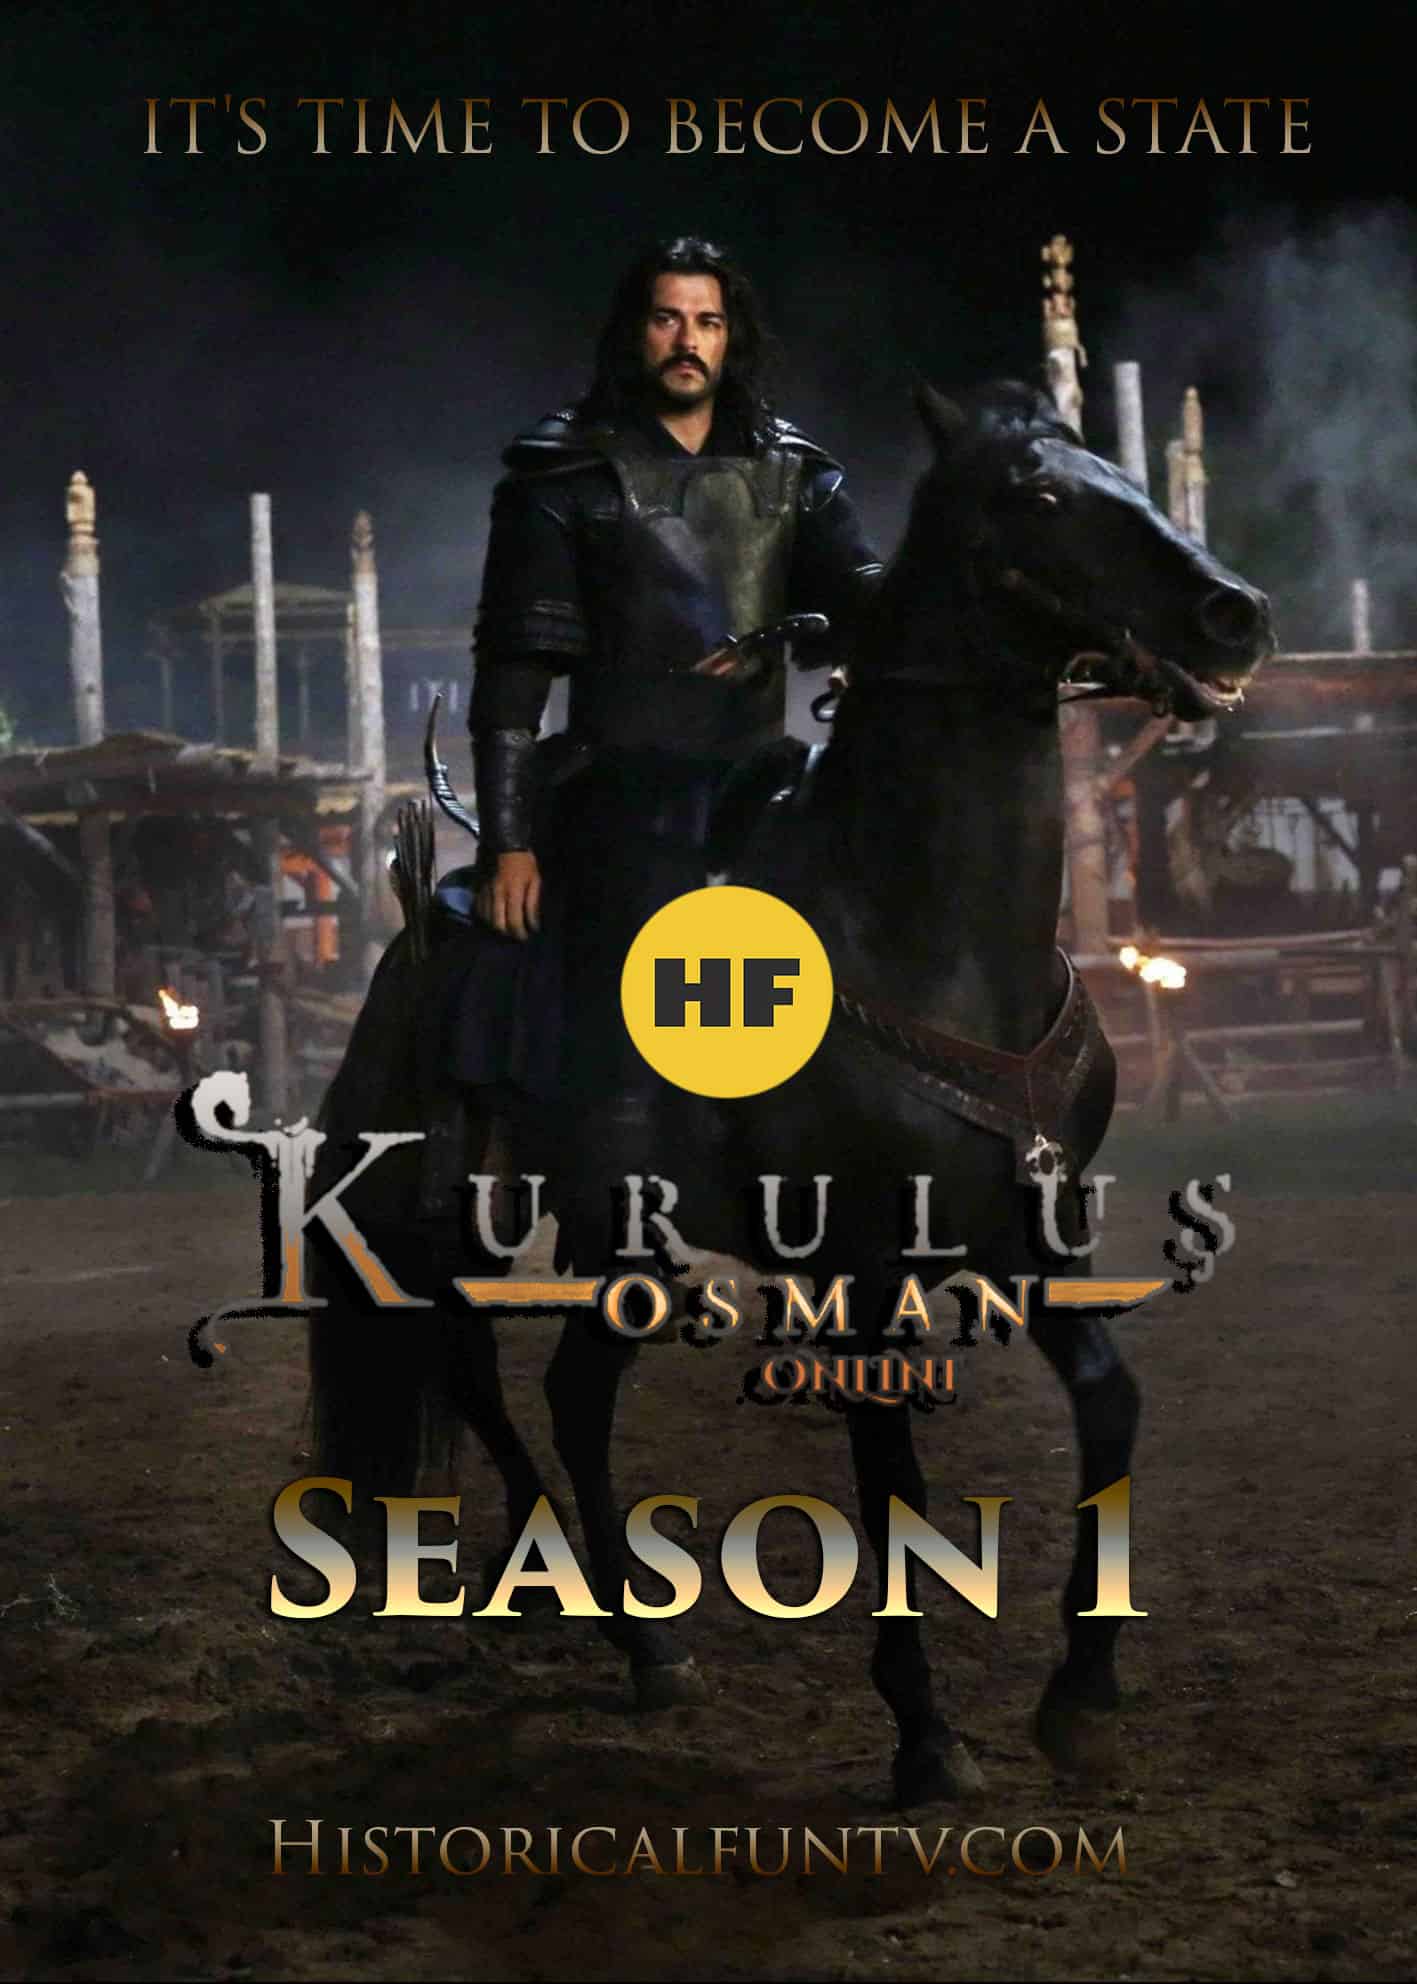 Kurulus osman season 2